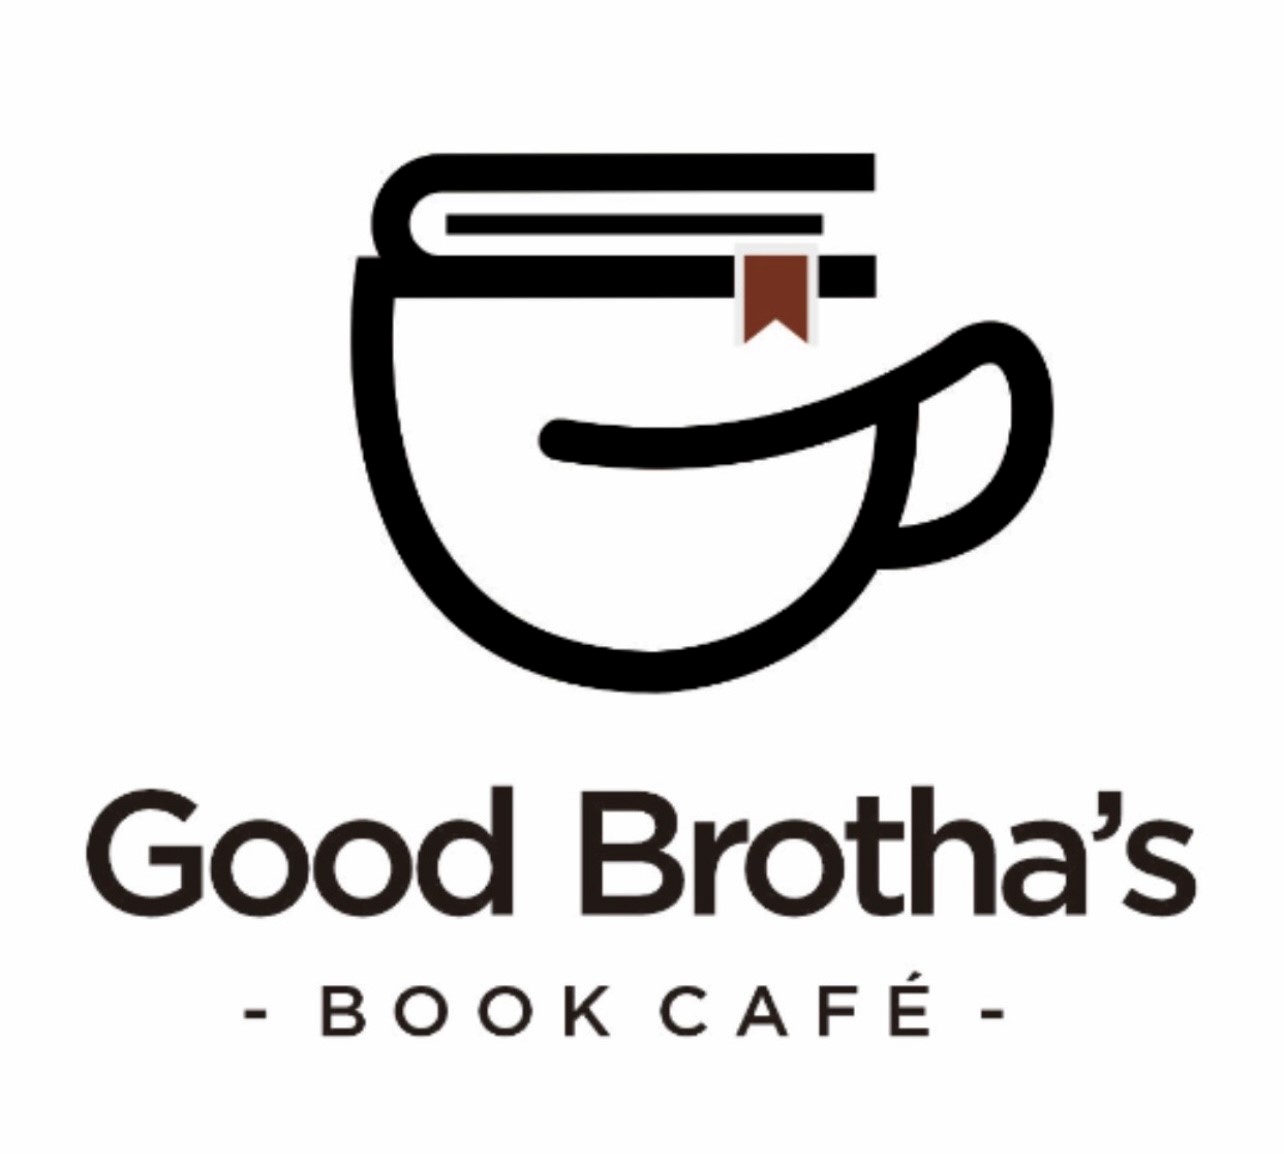 Good Brotha's Book Cafe